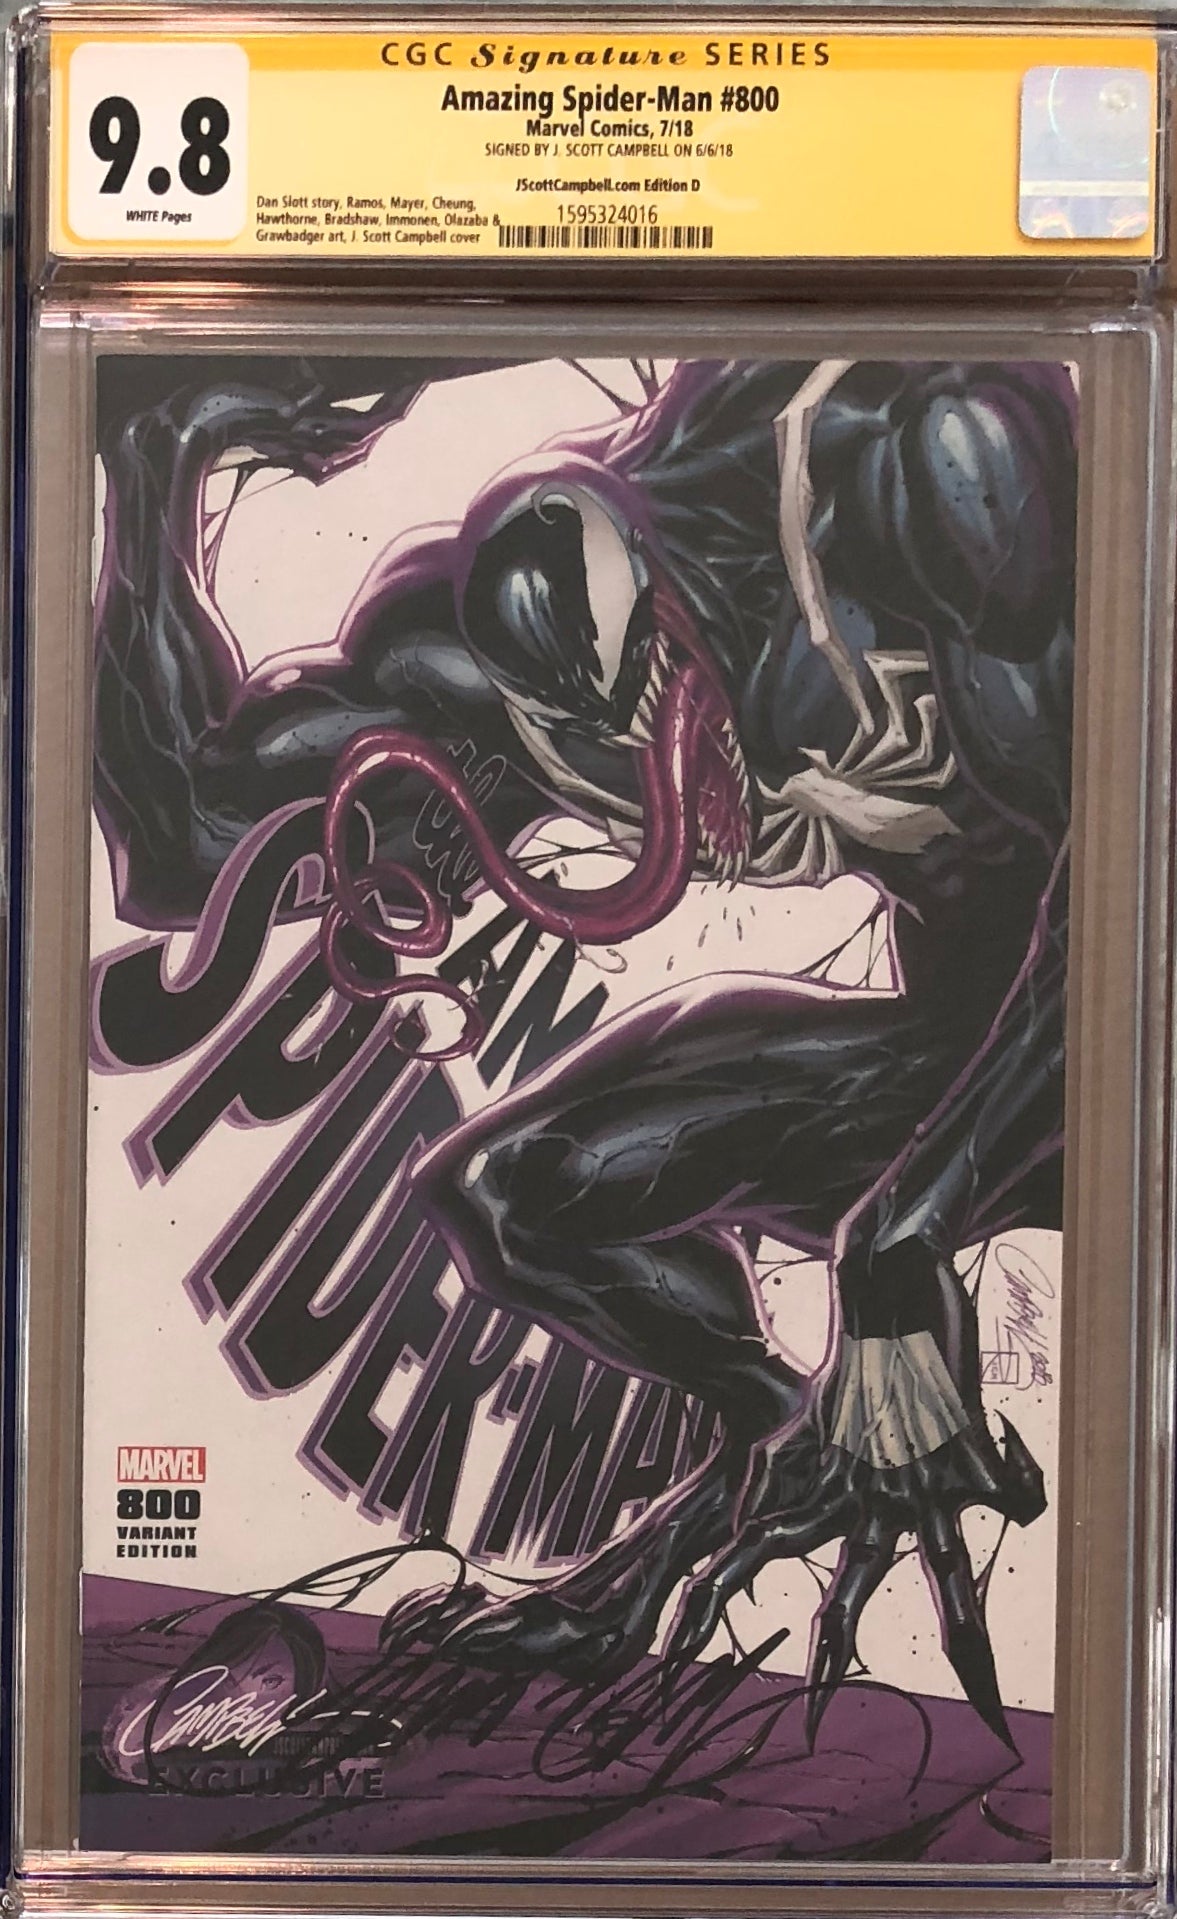 Amazing Spider-Man #800 J. Scott Campbell Edition D "Venom" Exclusive CGC 9.8 SS